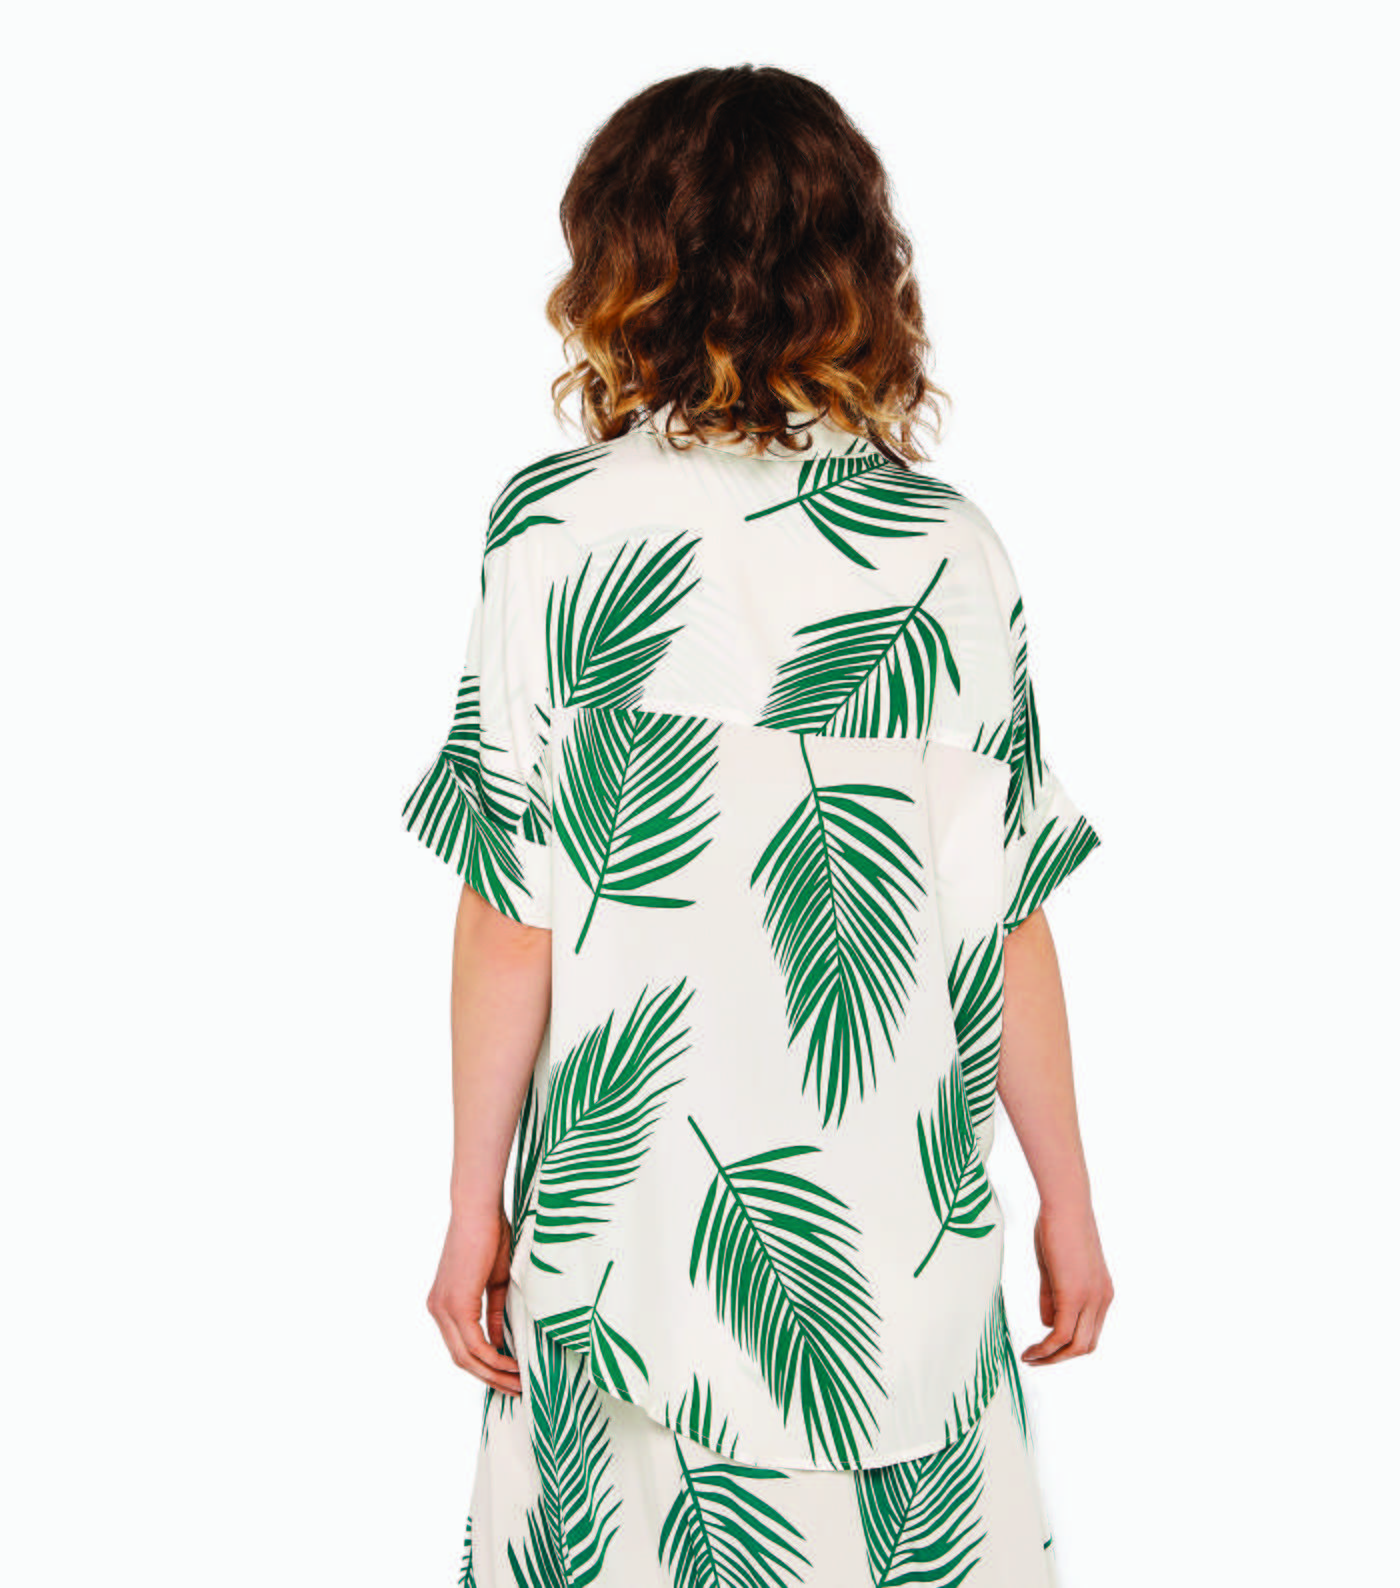 Apricot White Palm Leaf Shirt Image 3